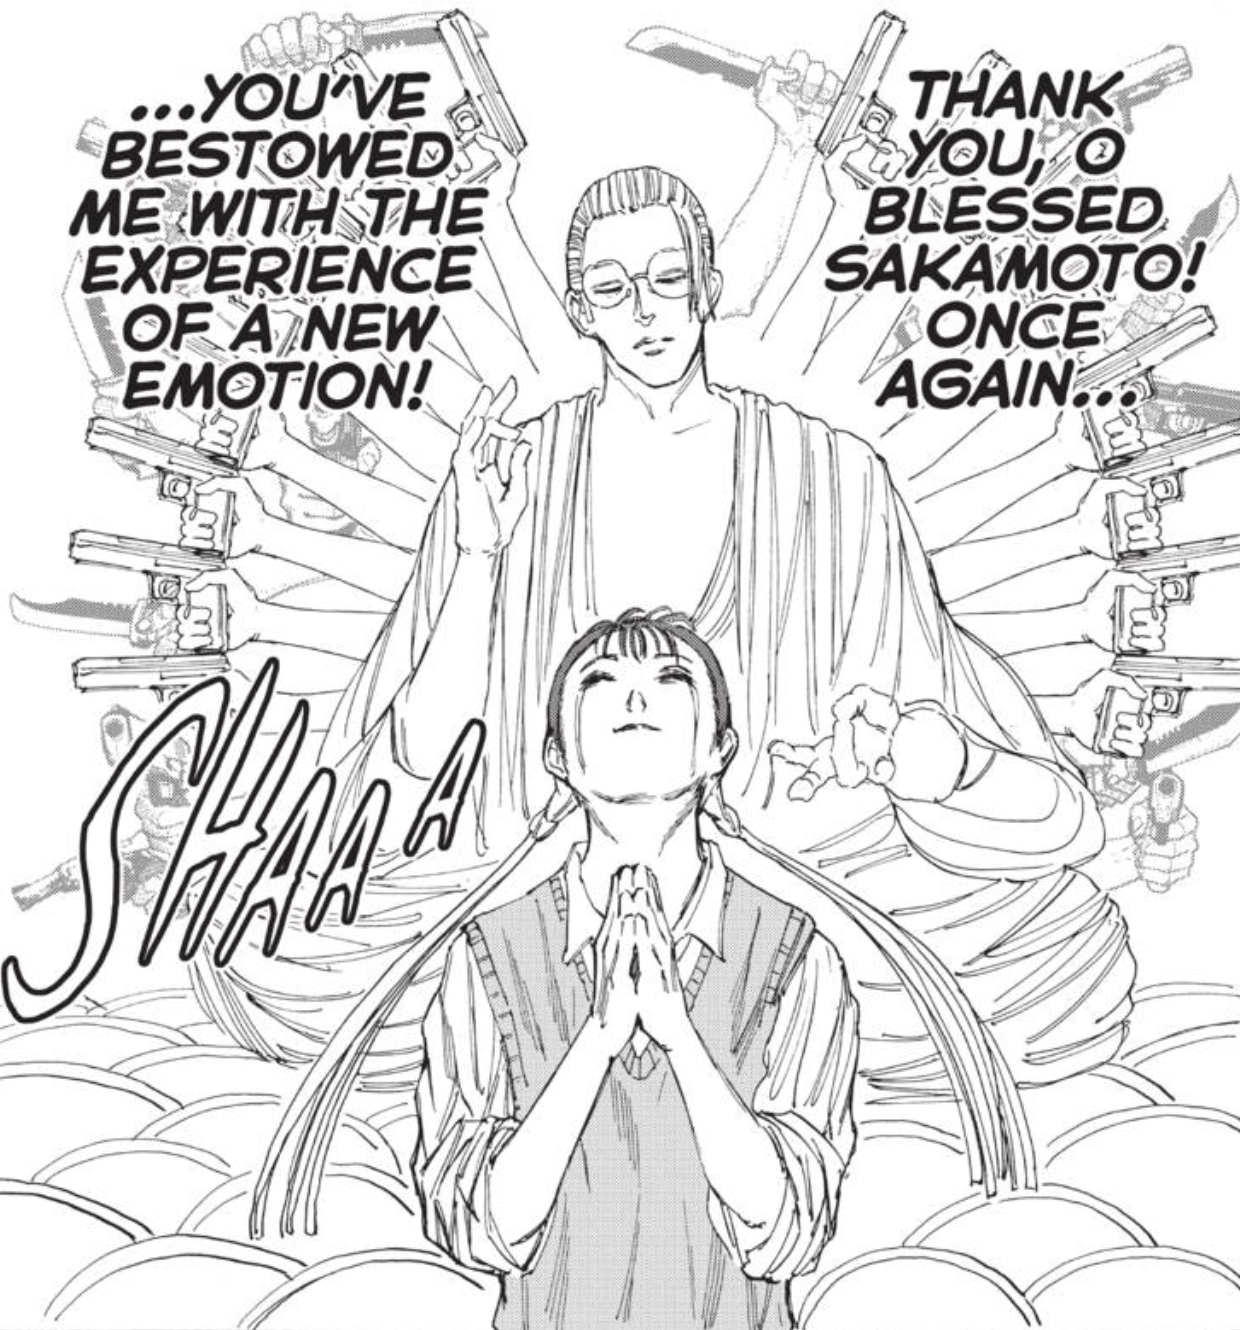 Training Session Manga: Sakamoto Days • • • Follow